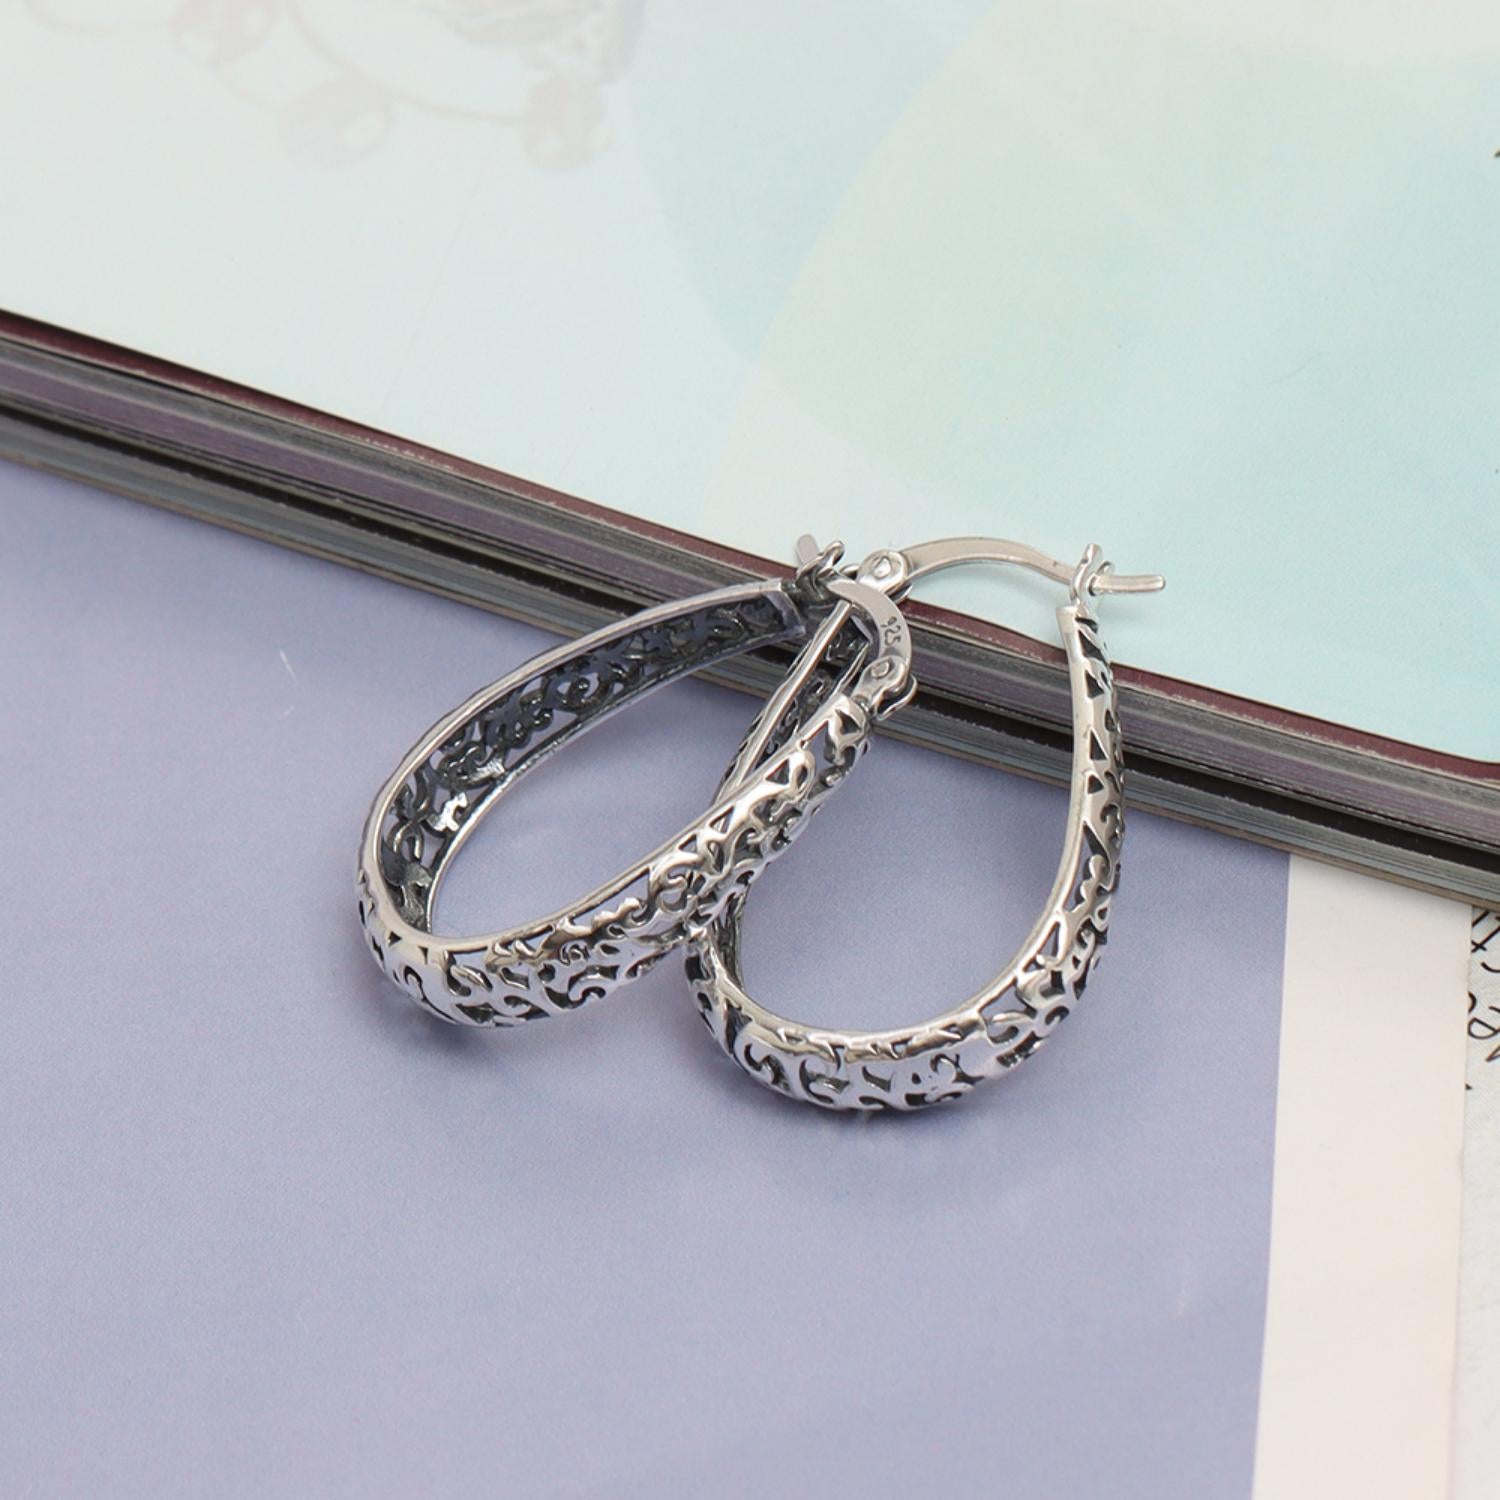 925 Sterling Silver Antique Oval Filigree Click-Top Hoop Earrings for Women